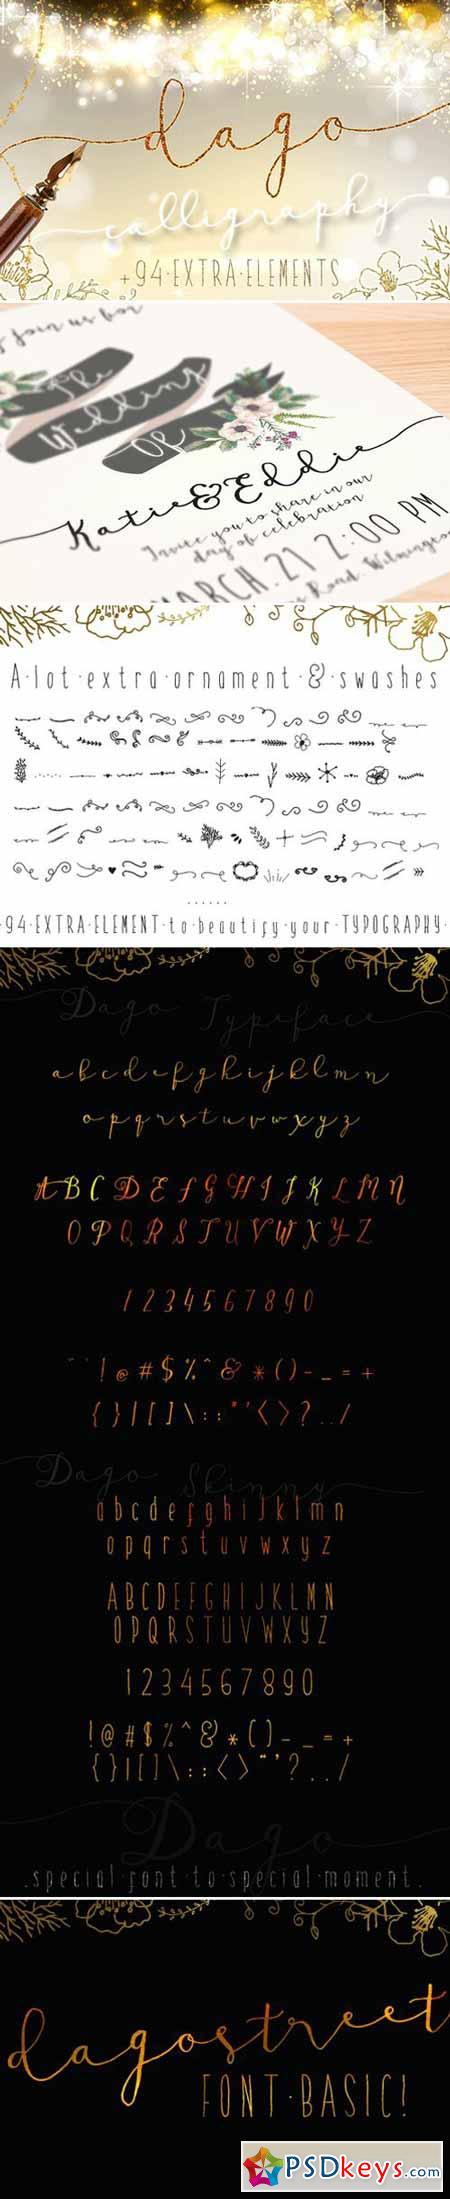 Dago, Modern Calligraphy Font 94422